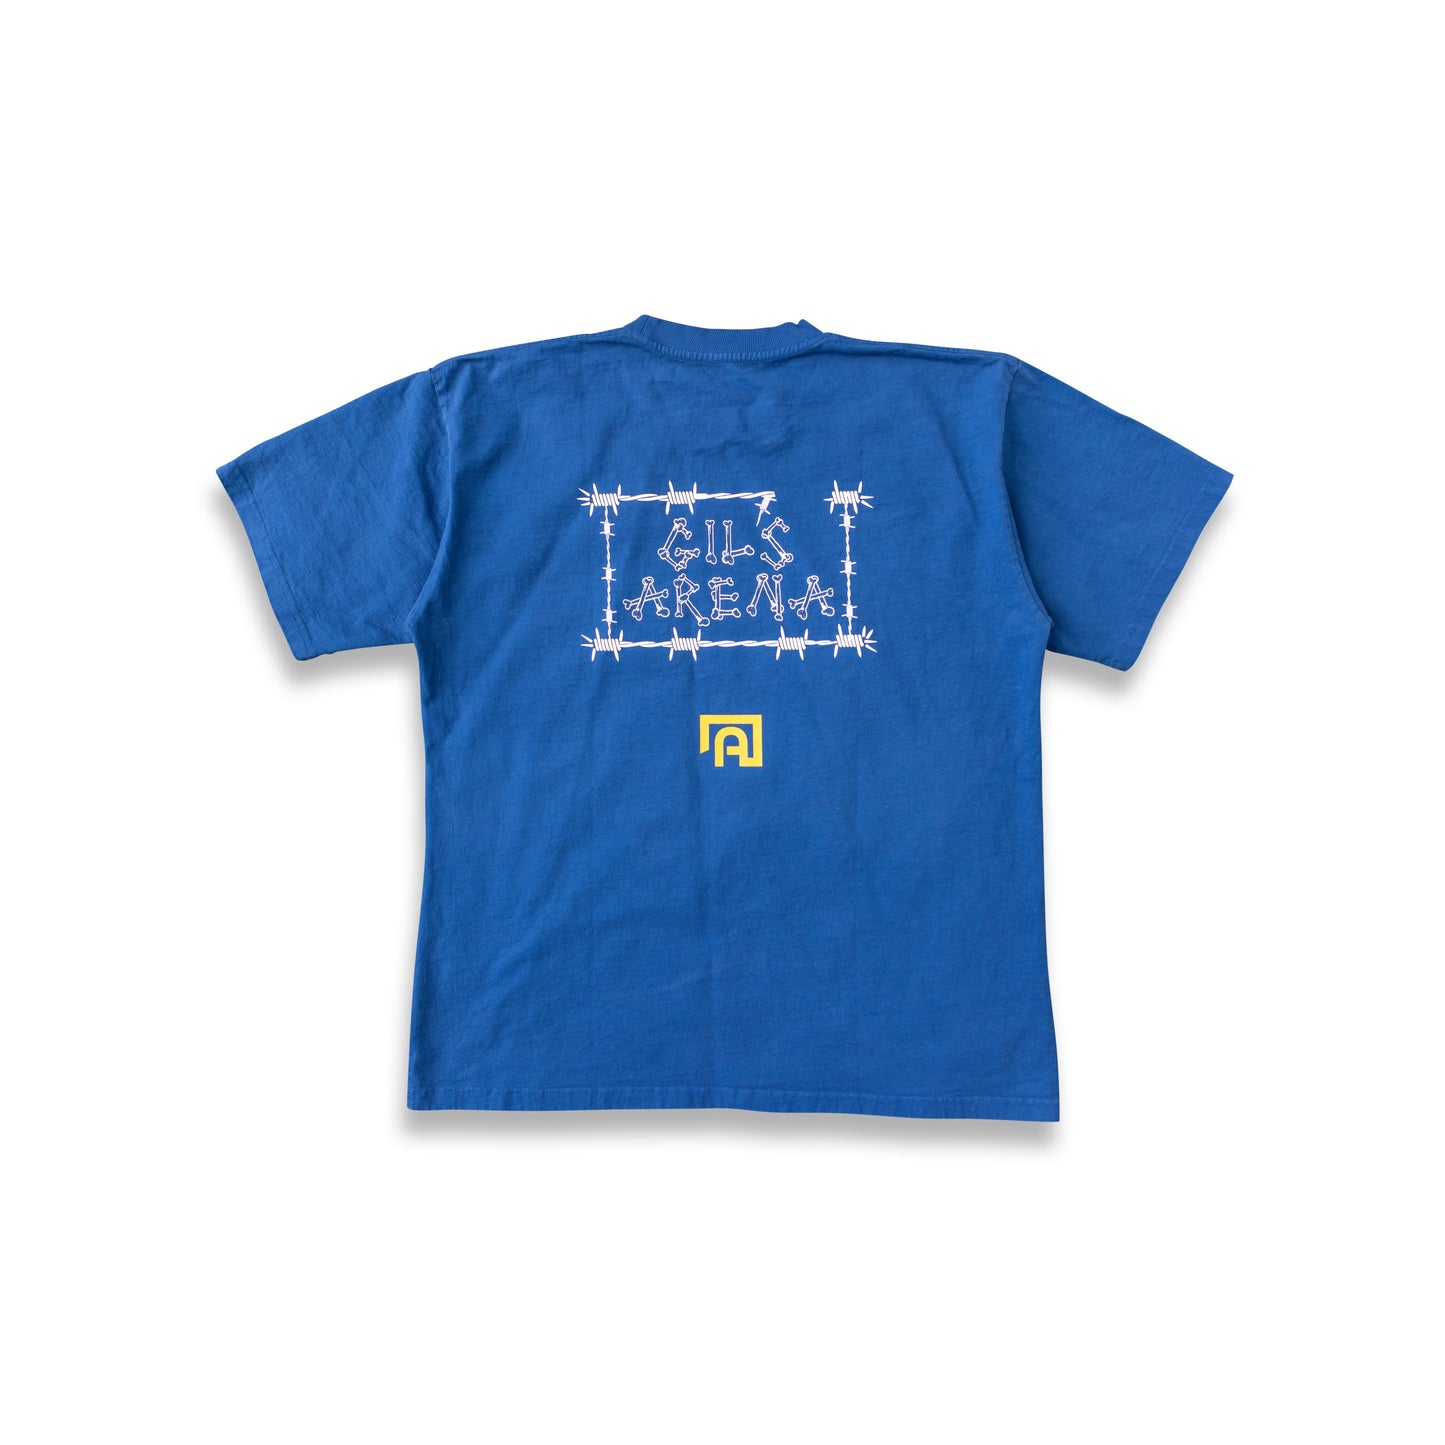 Gil’s Arena x Tuff Crowd / Hostile Territory Blue T-Shirt